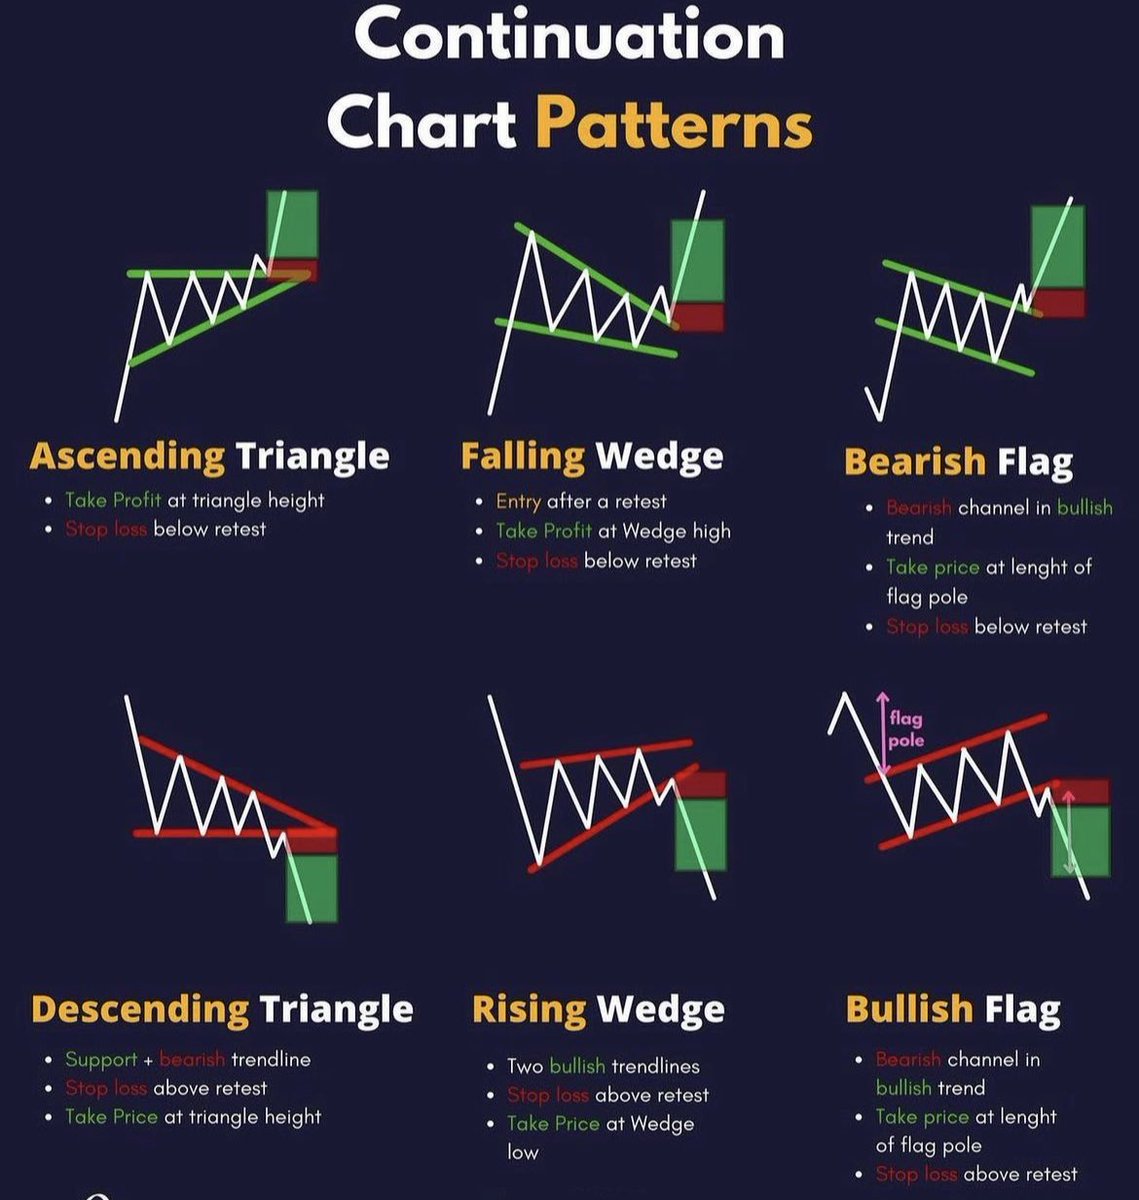 Continuation chart patterns:

1.Ascending Triangle 

2.Falling wedge 

3.Bearish flag

4.Descending Triangle 

5.Rising Wedge&

6.Bullish Flag.

MARKET SURGERY.